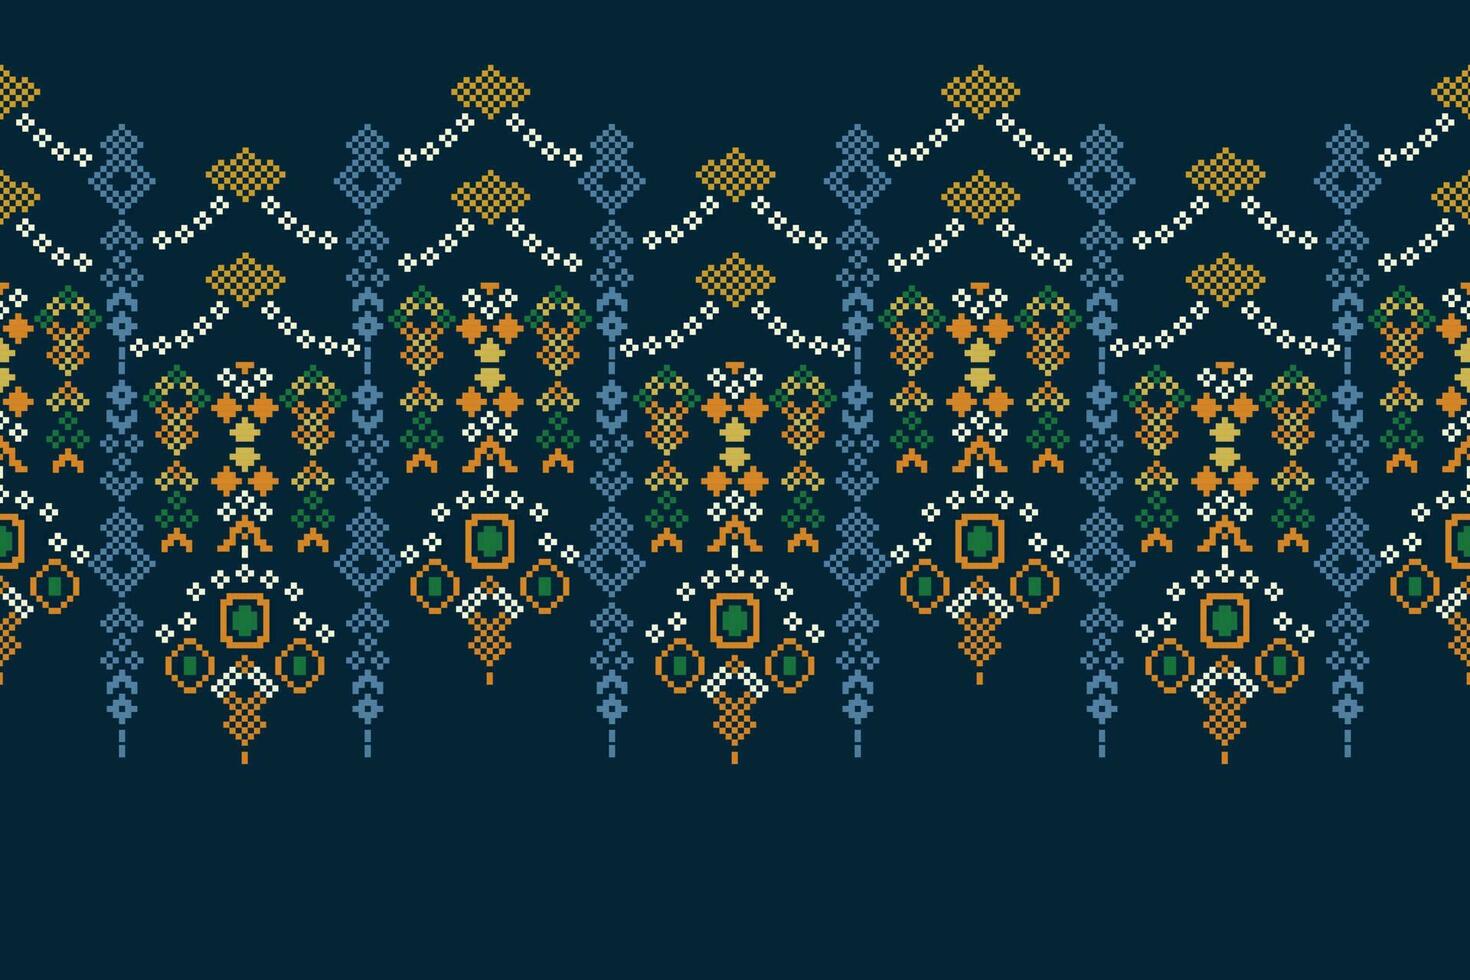 etnisk geometrisk tyg mönster korsa stitch.ikat broderi etnisk orientalisk pixel mönster Marin blå bakgrund. abstrakt, vektor, illustration. textur, kläder, ram, dekoration, motiv, siden tapet. vektor